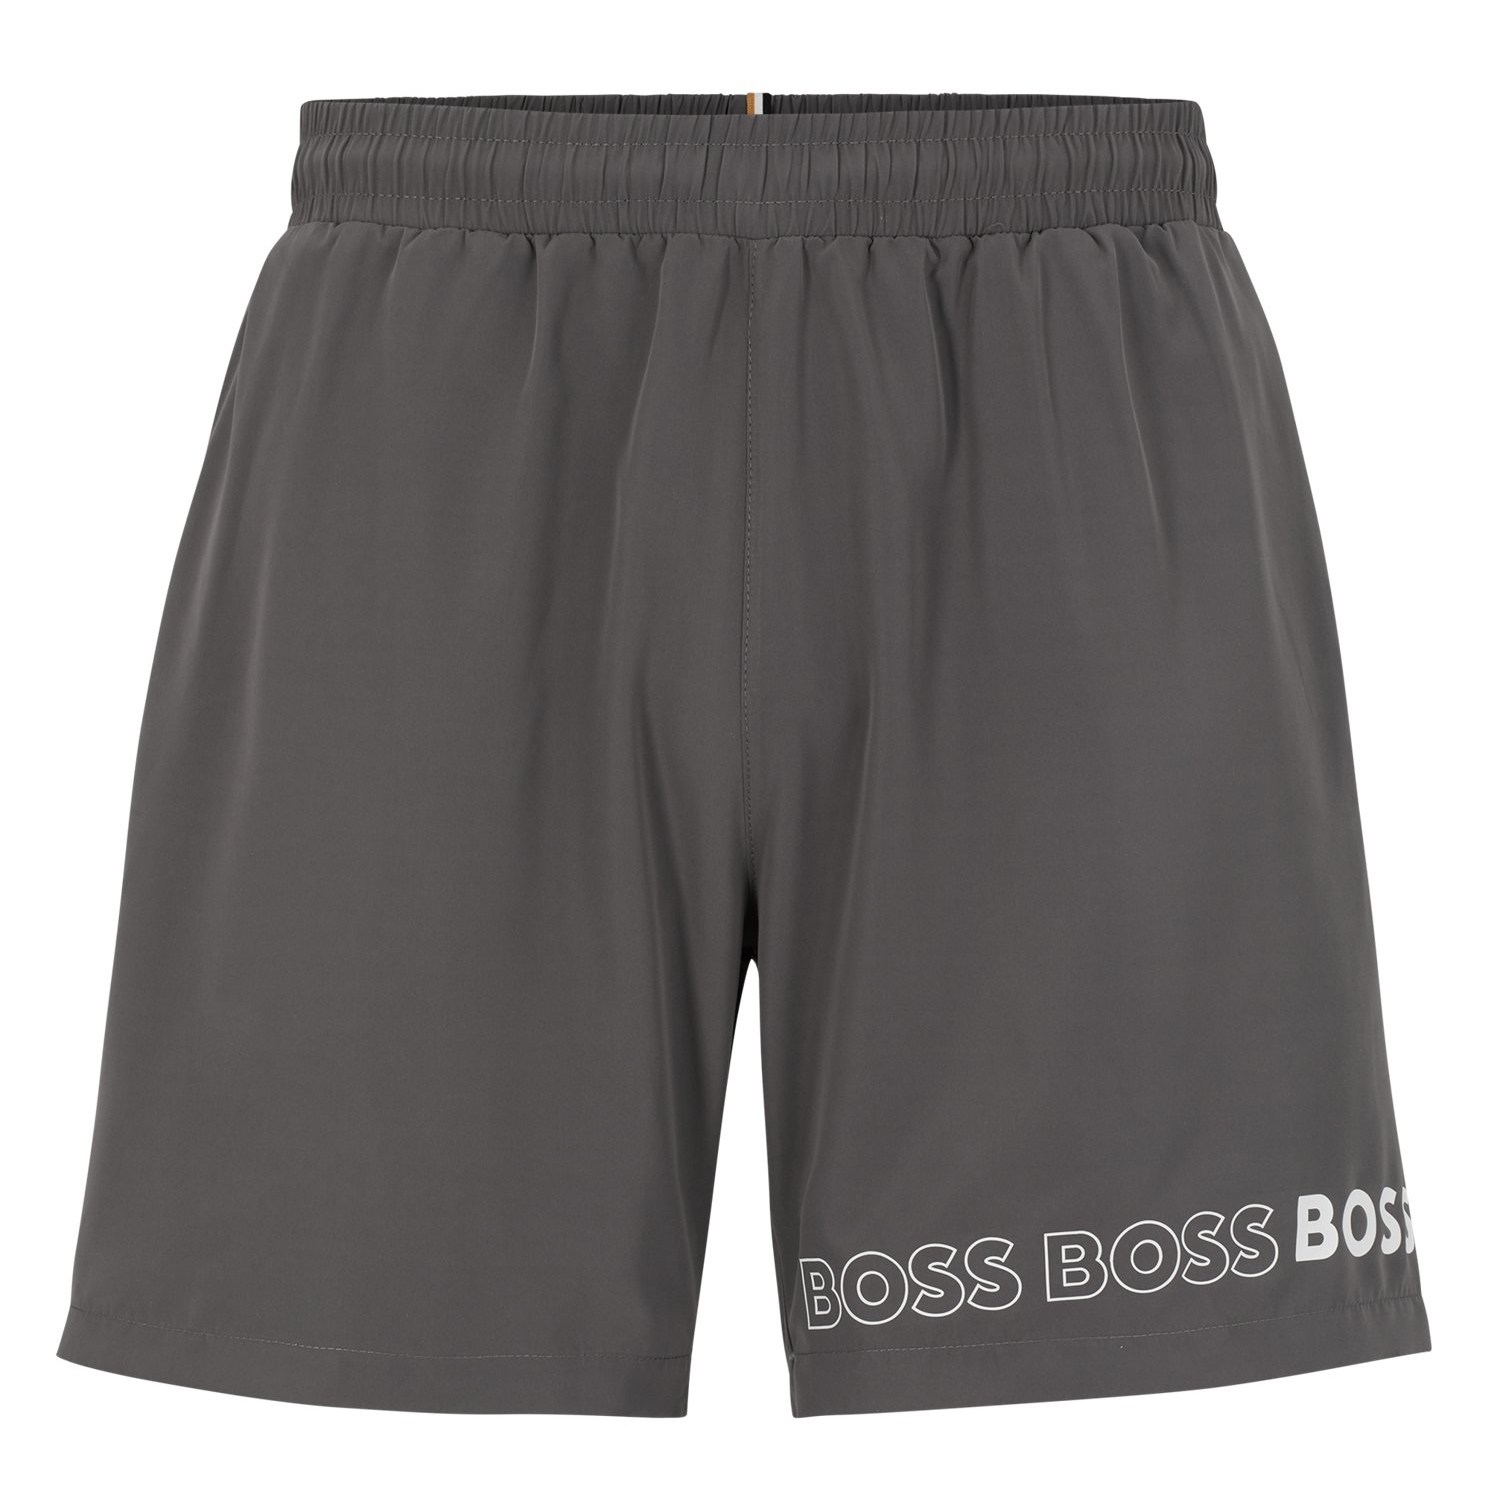 Купальные шорты Hugo Boss With Repeat Logos, темно-серый купальные шорты hugo boss with repeat logos темно серый